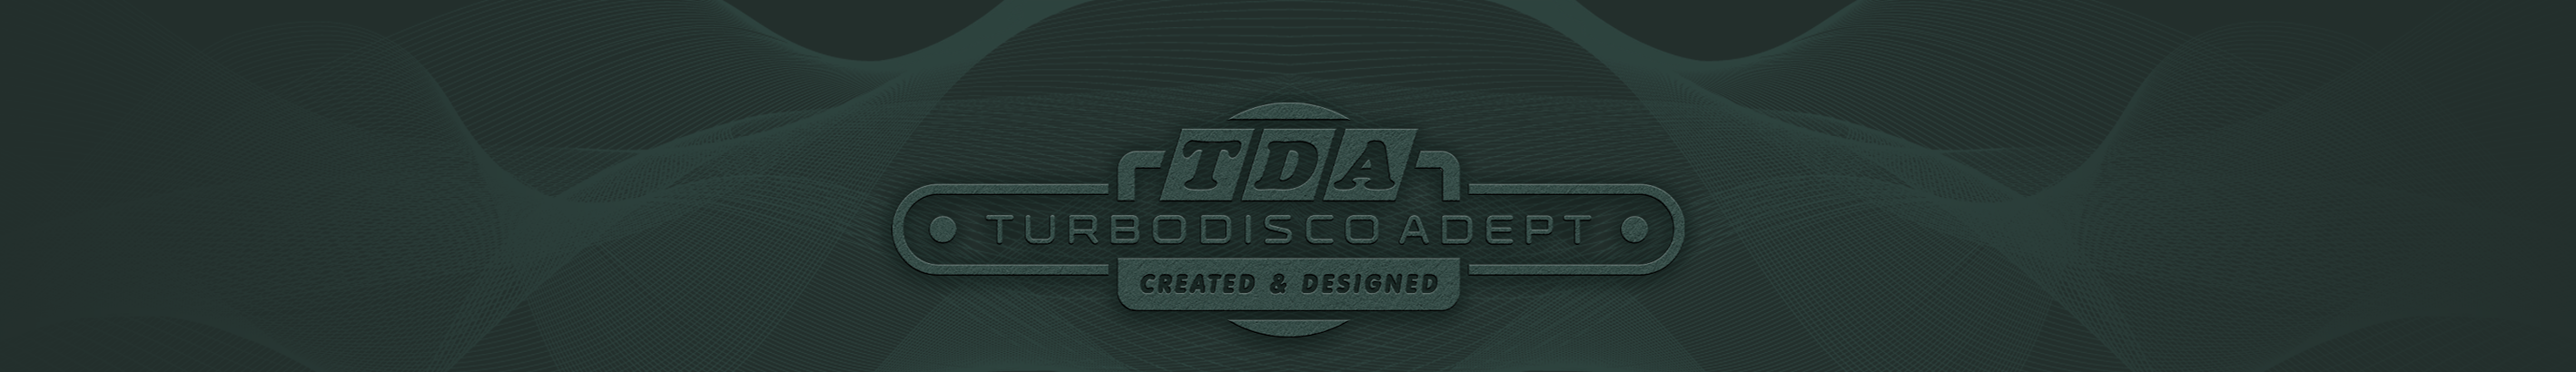 TurboDISCO Adept's profile banner